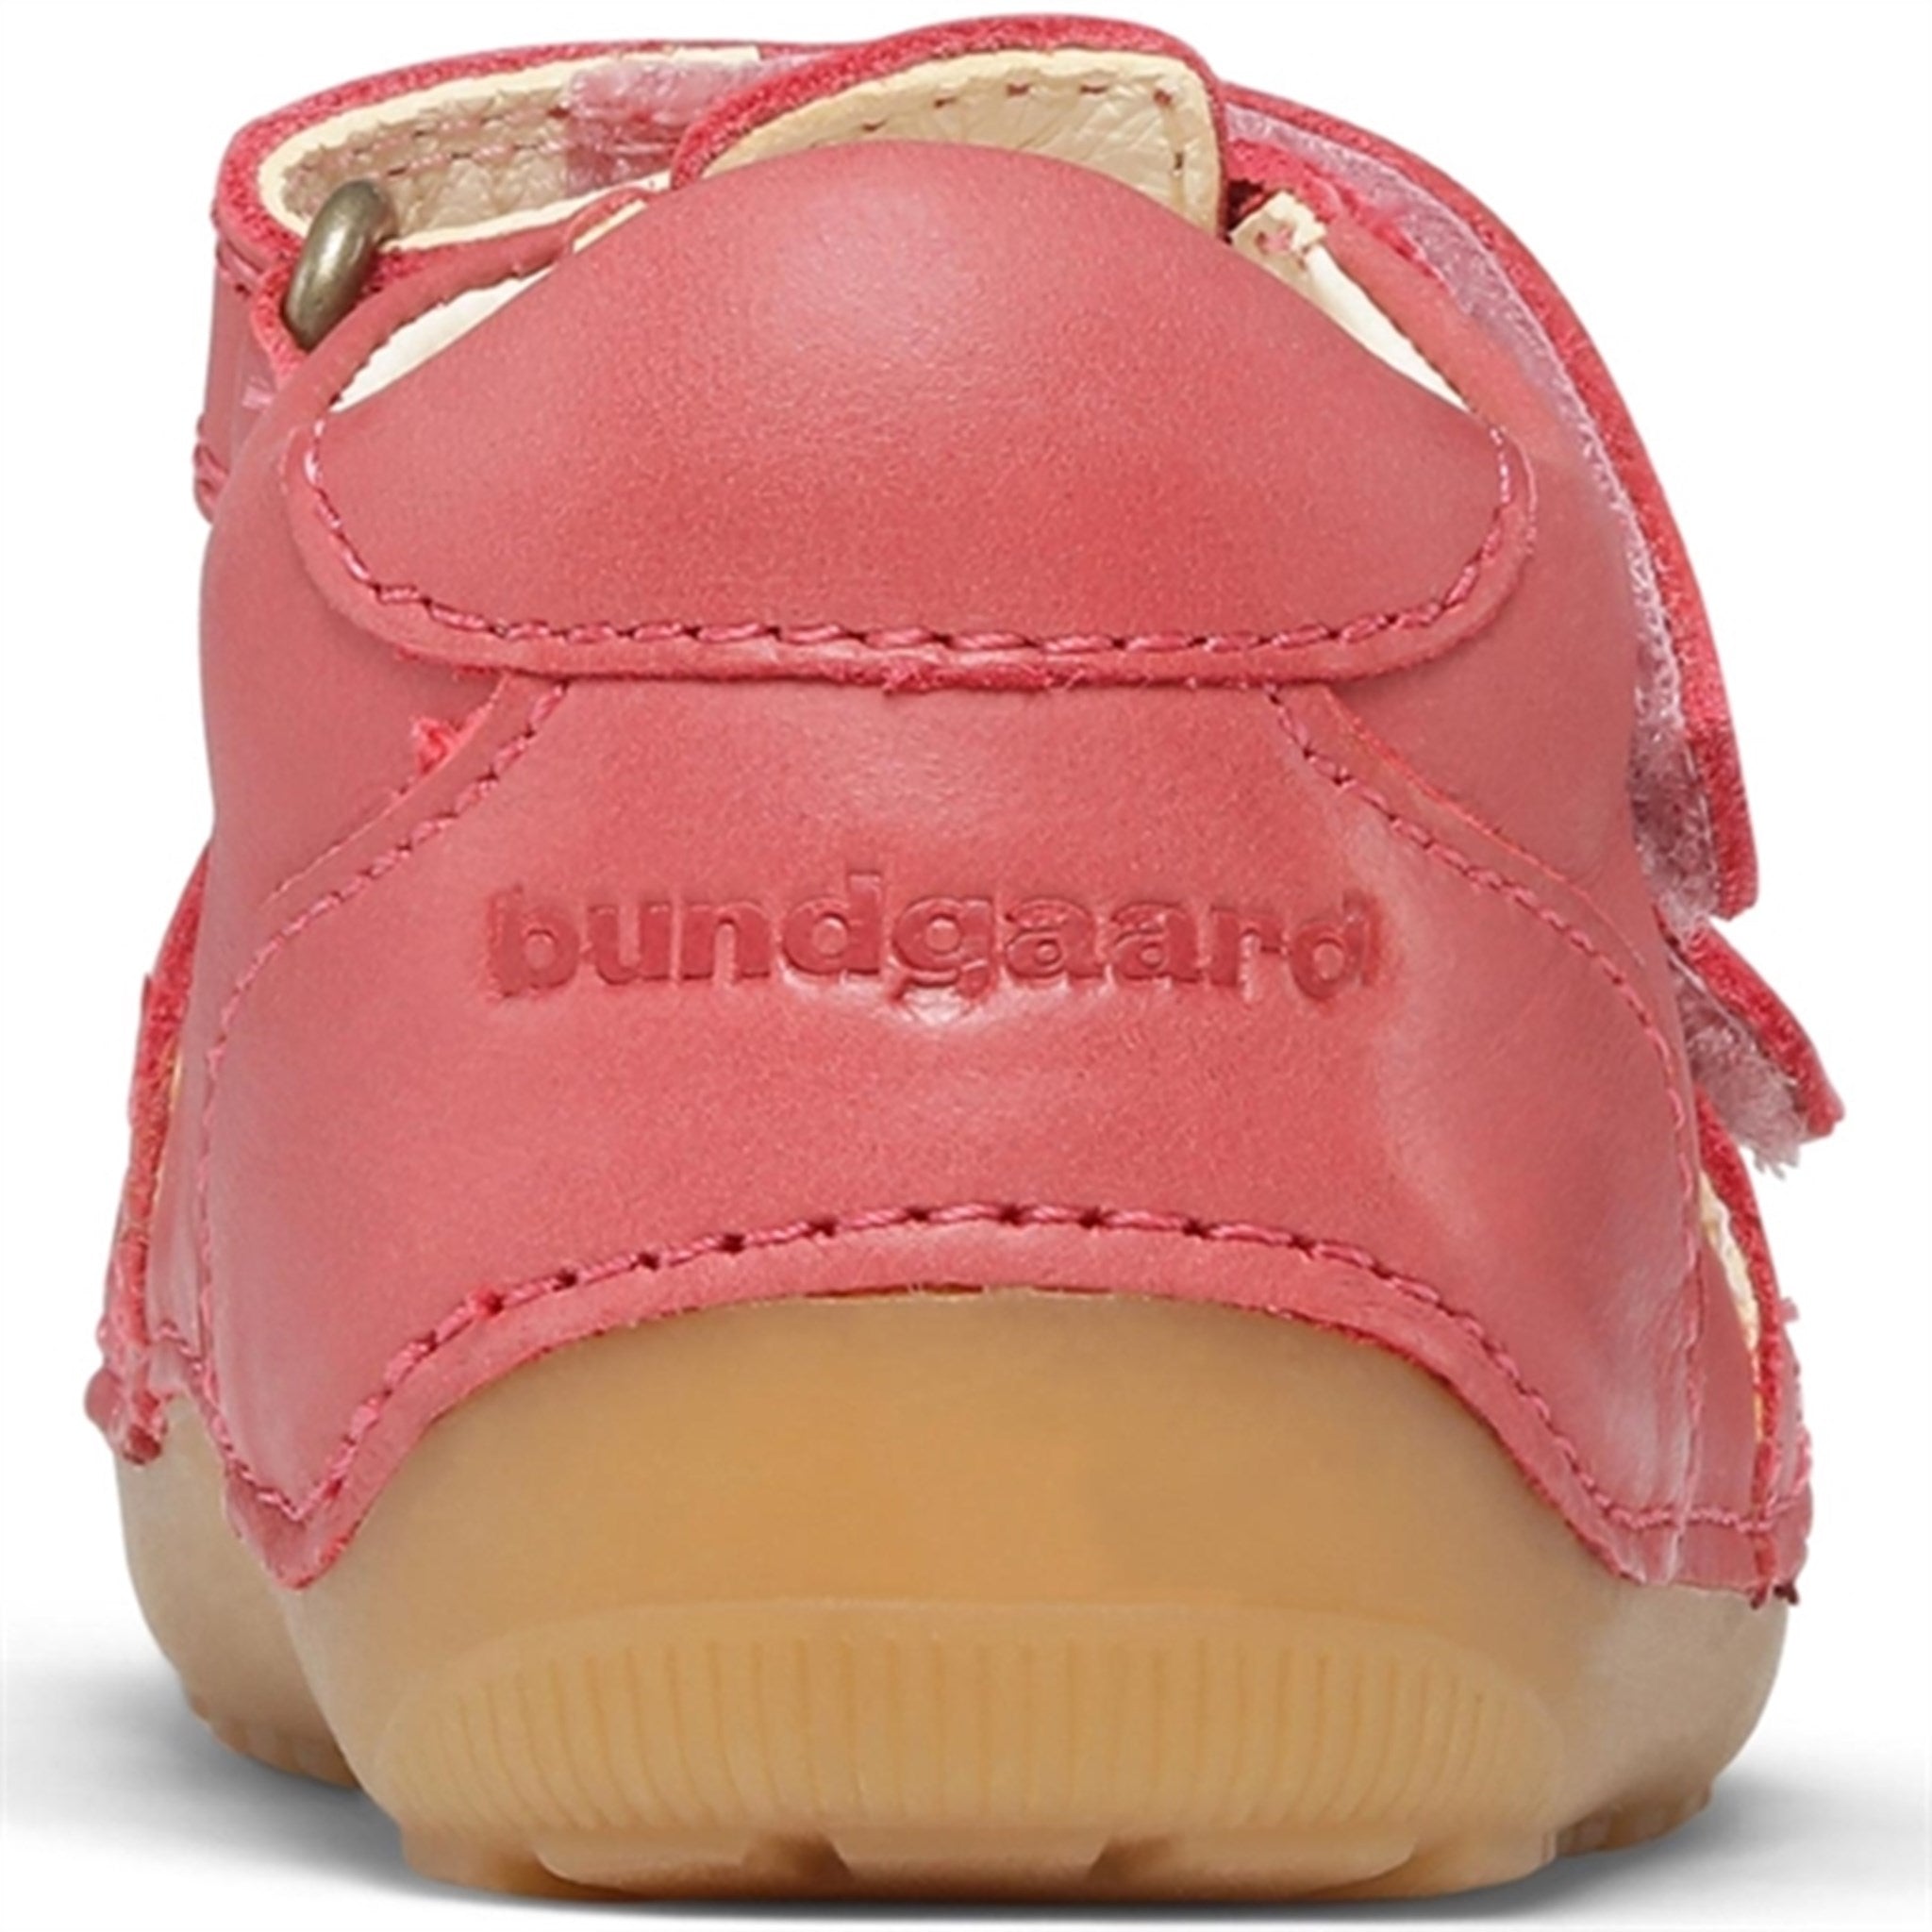 Bundgaard Petit Sandal Soft Rose 5